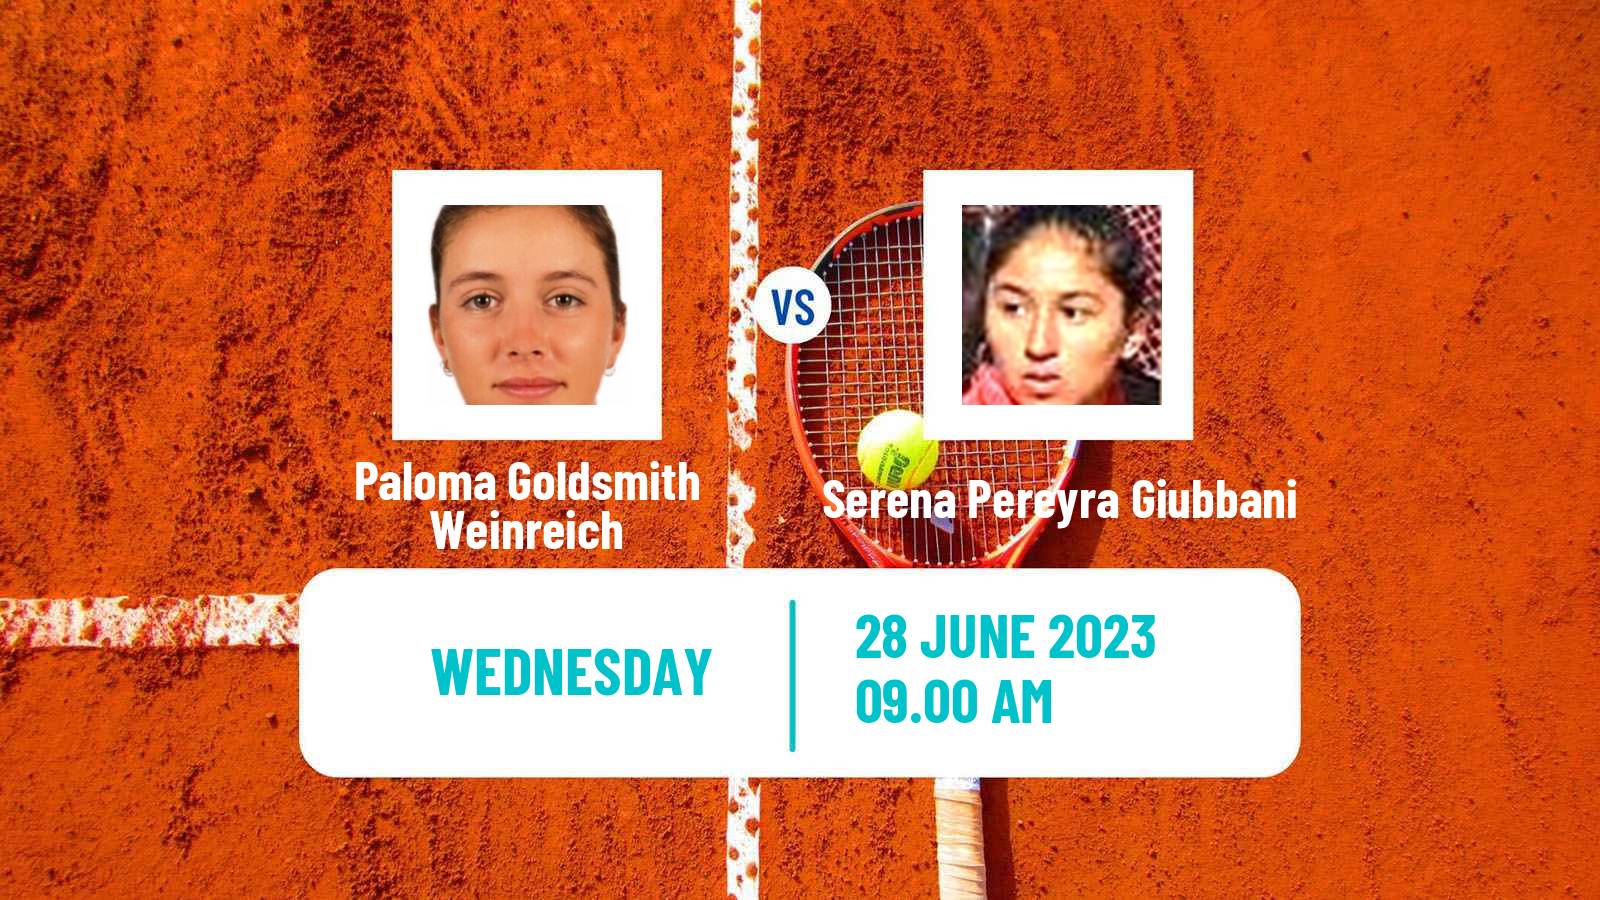 Tennis ITF W15 Rosario Santa Fe Women Paloma Goldsmith Weinreich - Serena Pereyra Giubbani